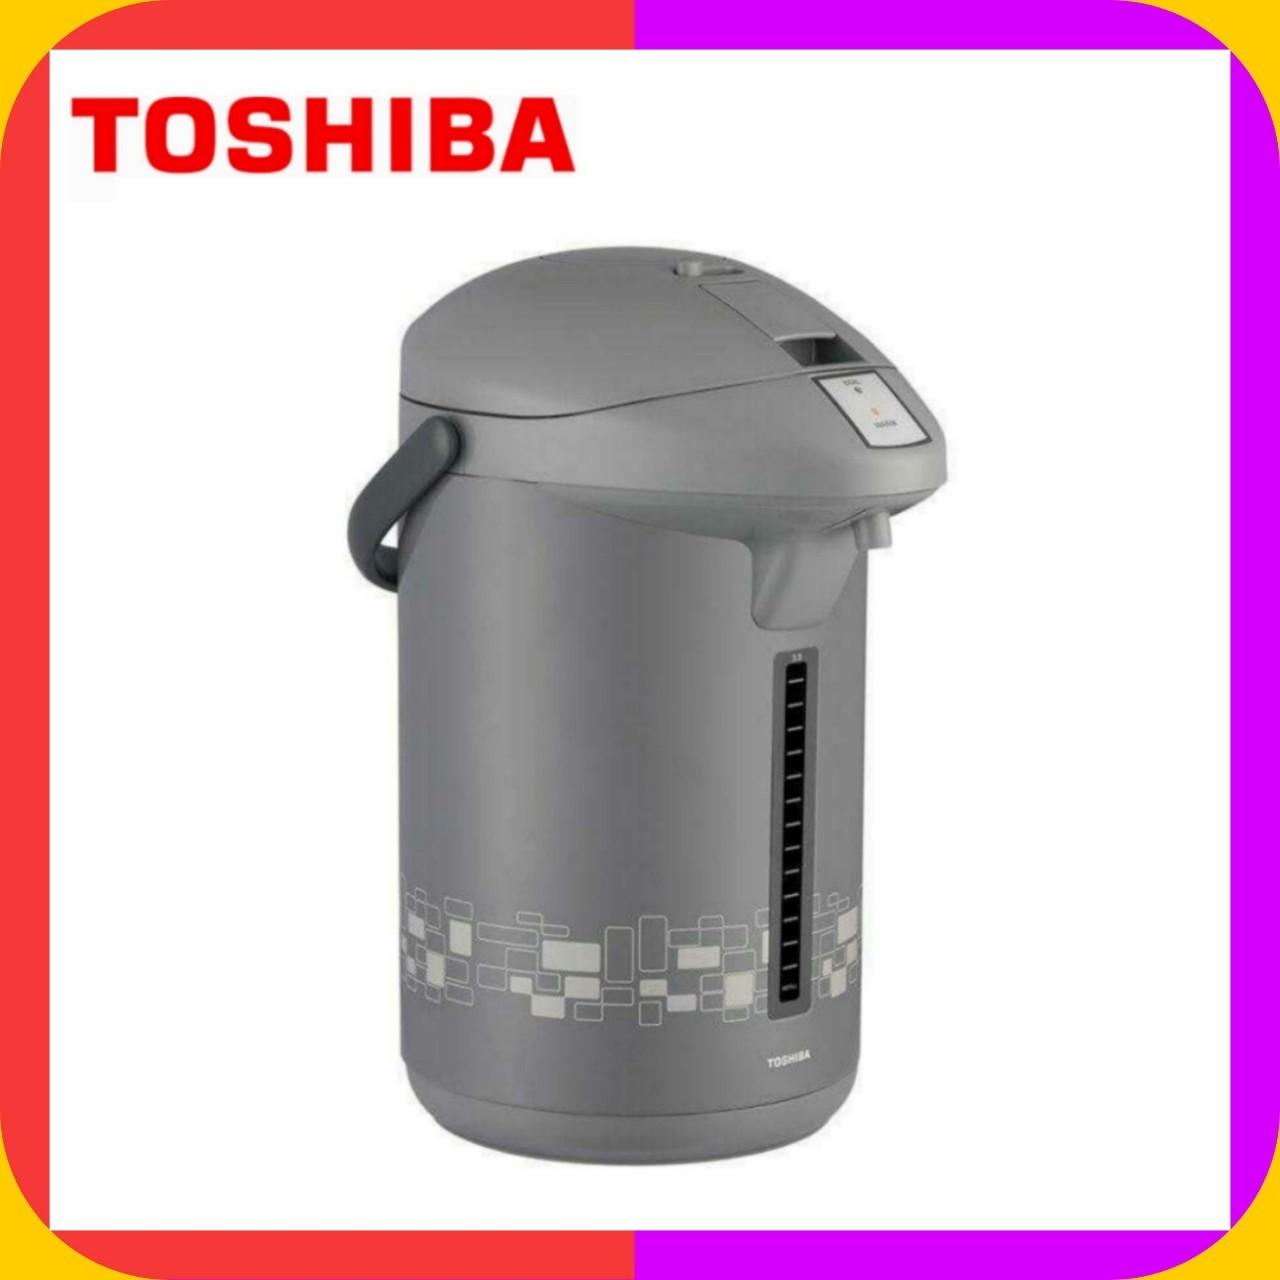 TOSHIBA กระติกน้ำร้อนไฟฟ้า โตชิบา 3.3 ลิตร รุ่น PLK-G33ESG สีเทา TOSHIBA Electric Kettle 3.3L Model PLK-G33ESG Gray